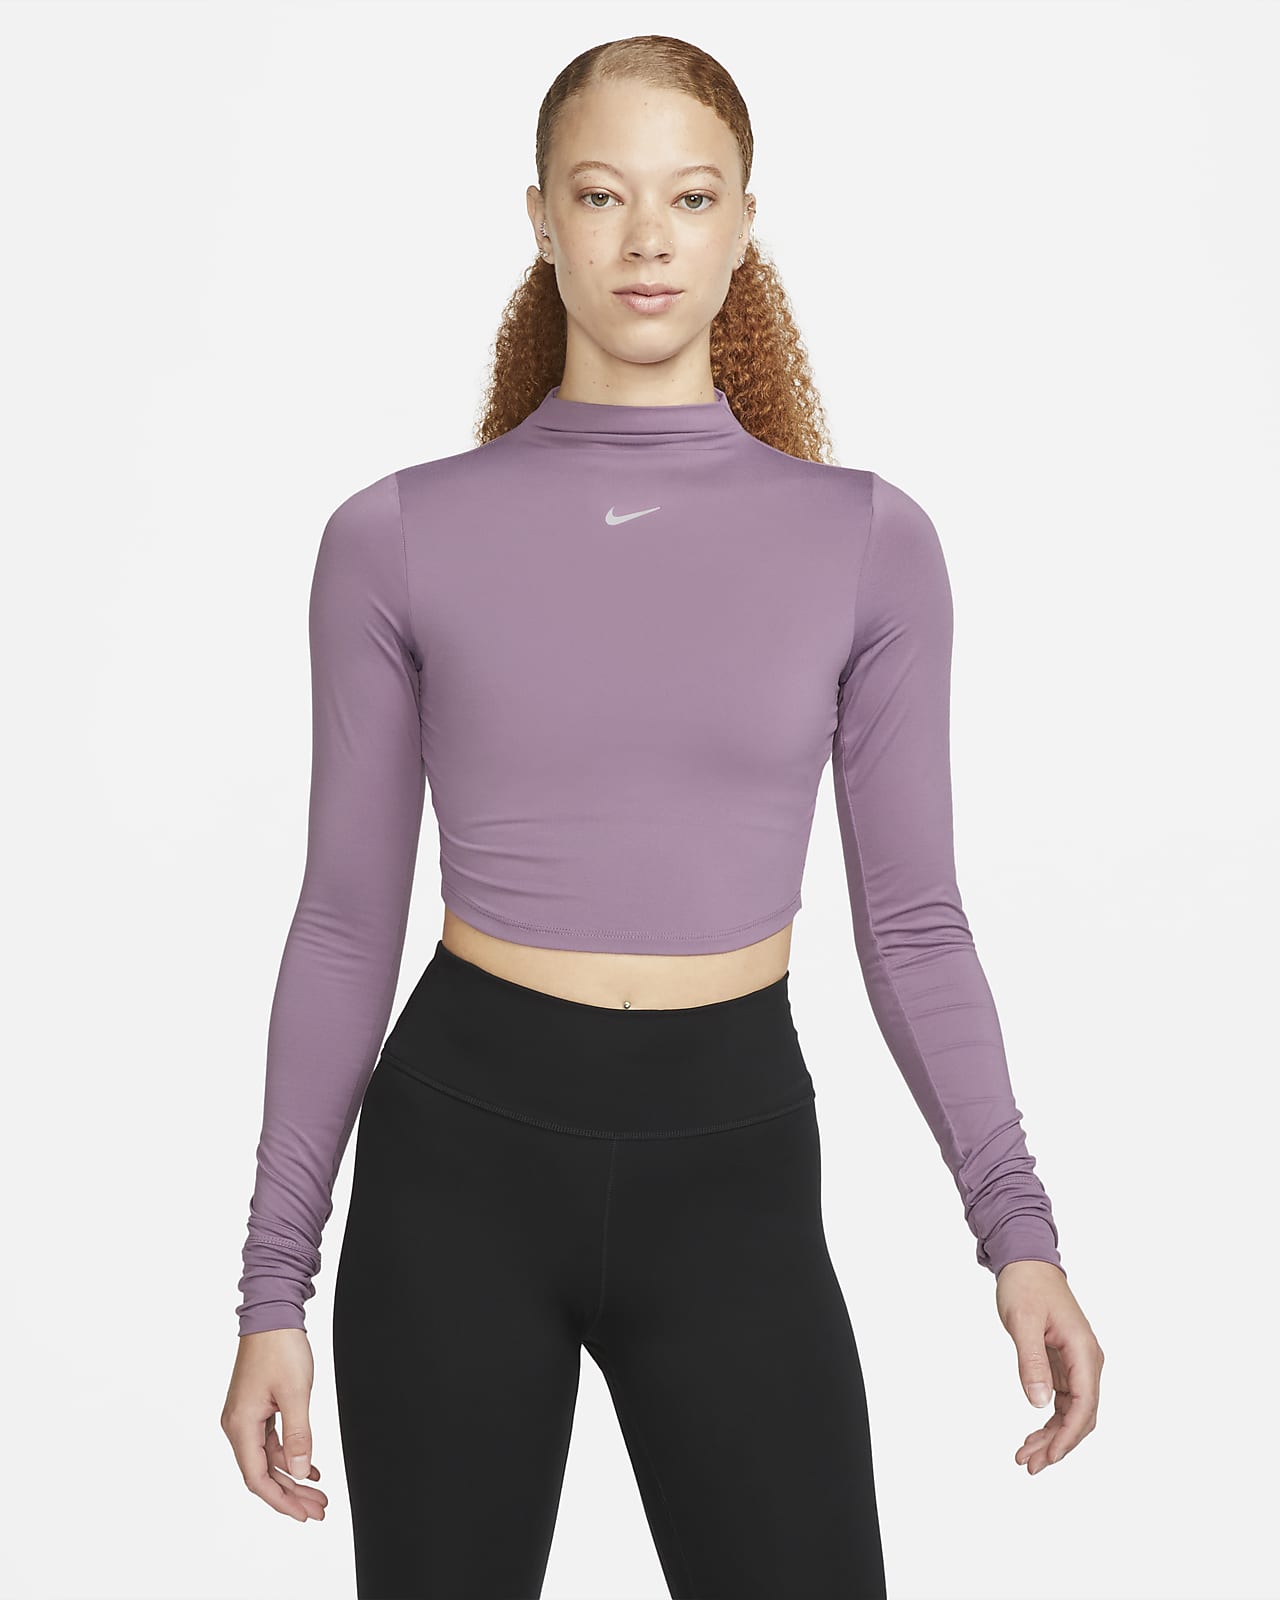 Nike One Women's Long-Sleeve Cropped Top. Nike LU